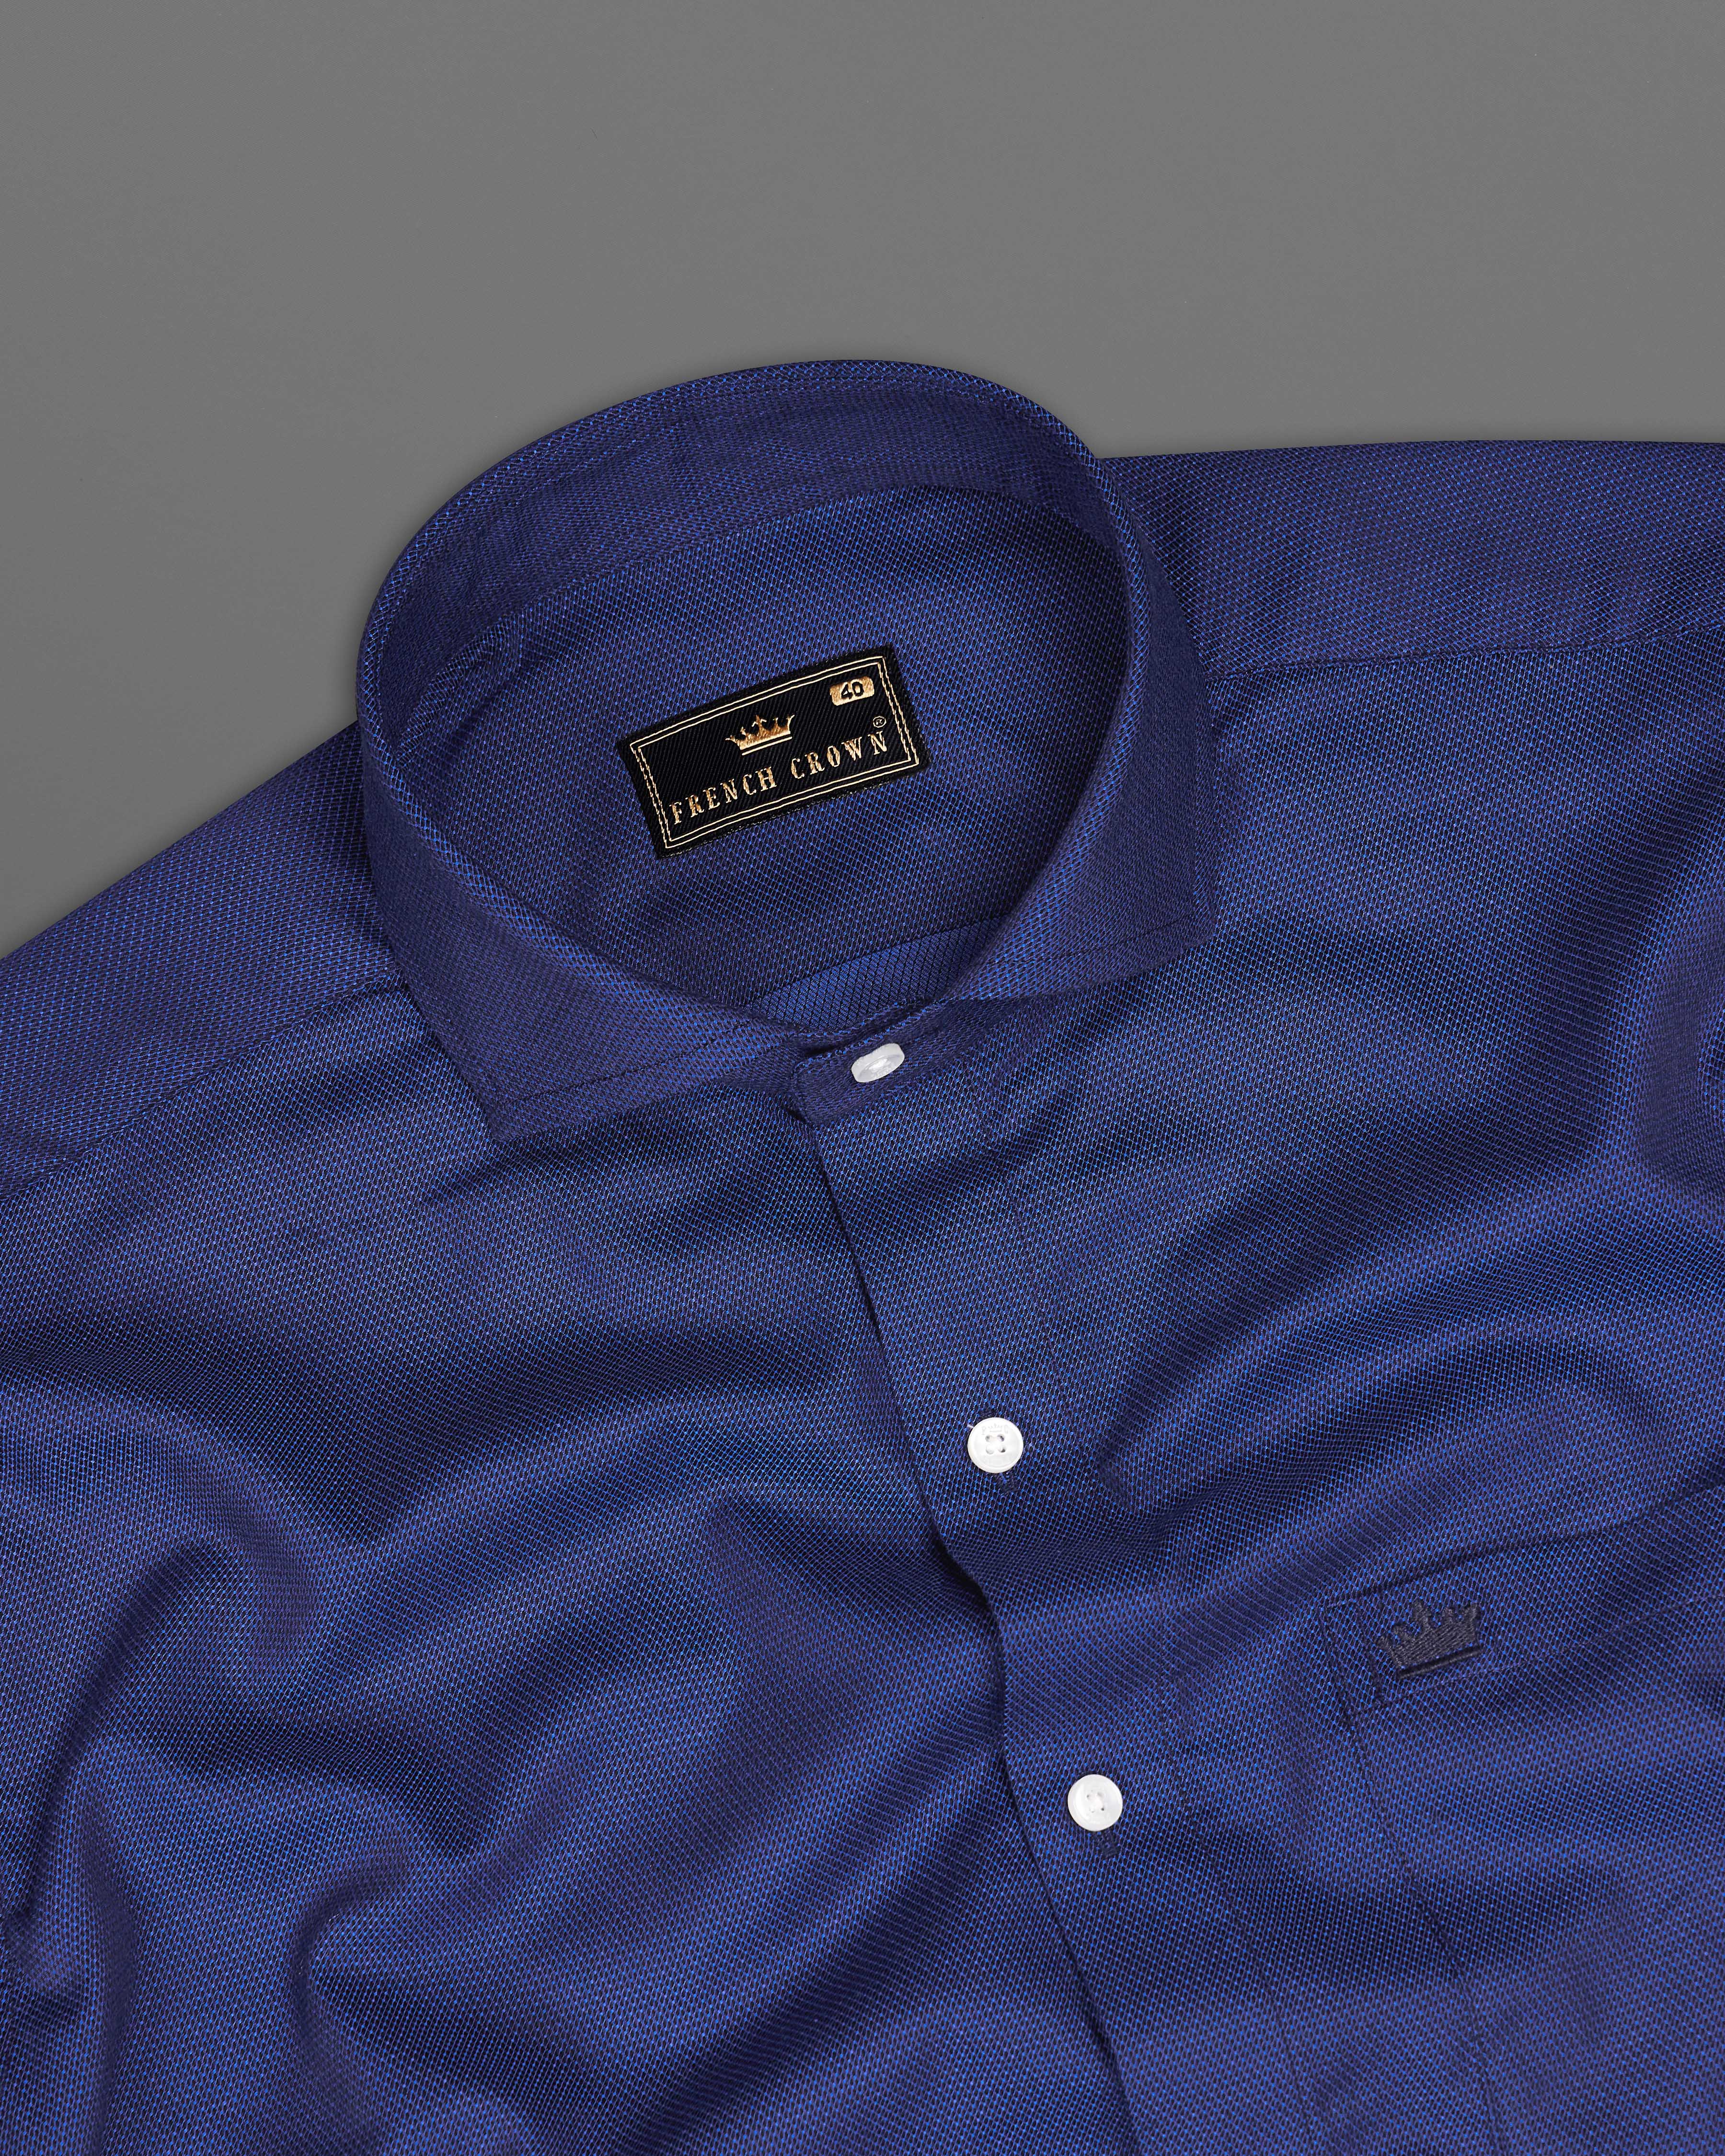 Rhino Navy Blue Dobby Textured Premium Giza Cotton Shirt